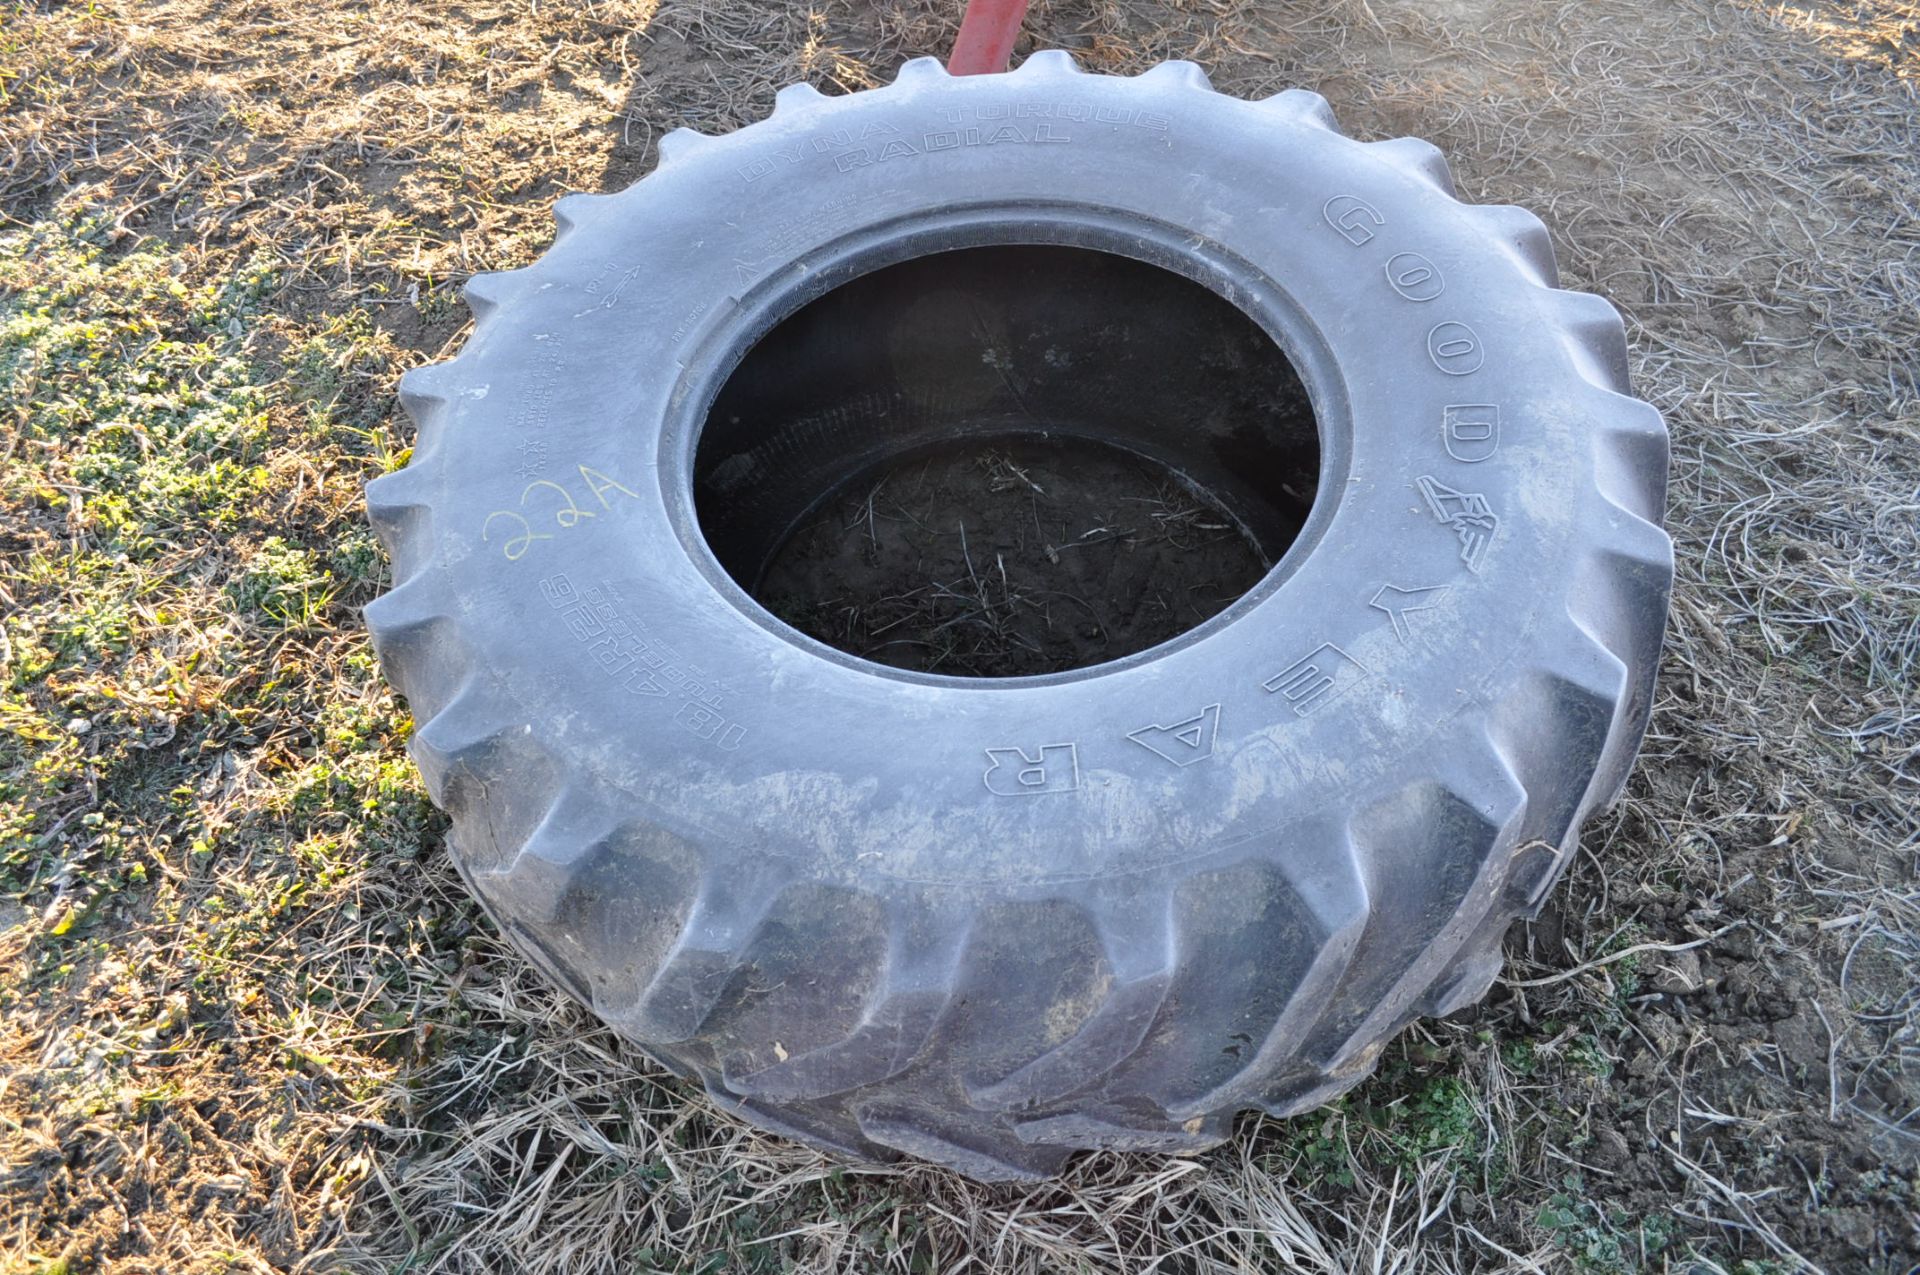 18.4R26 tire